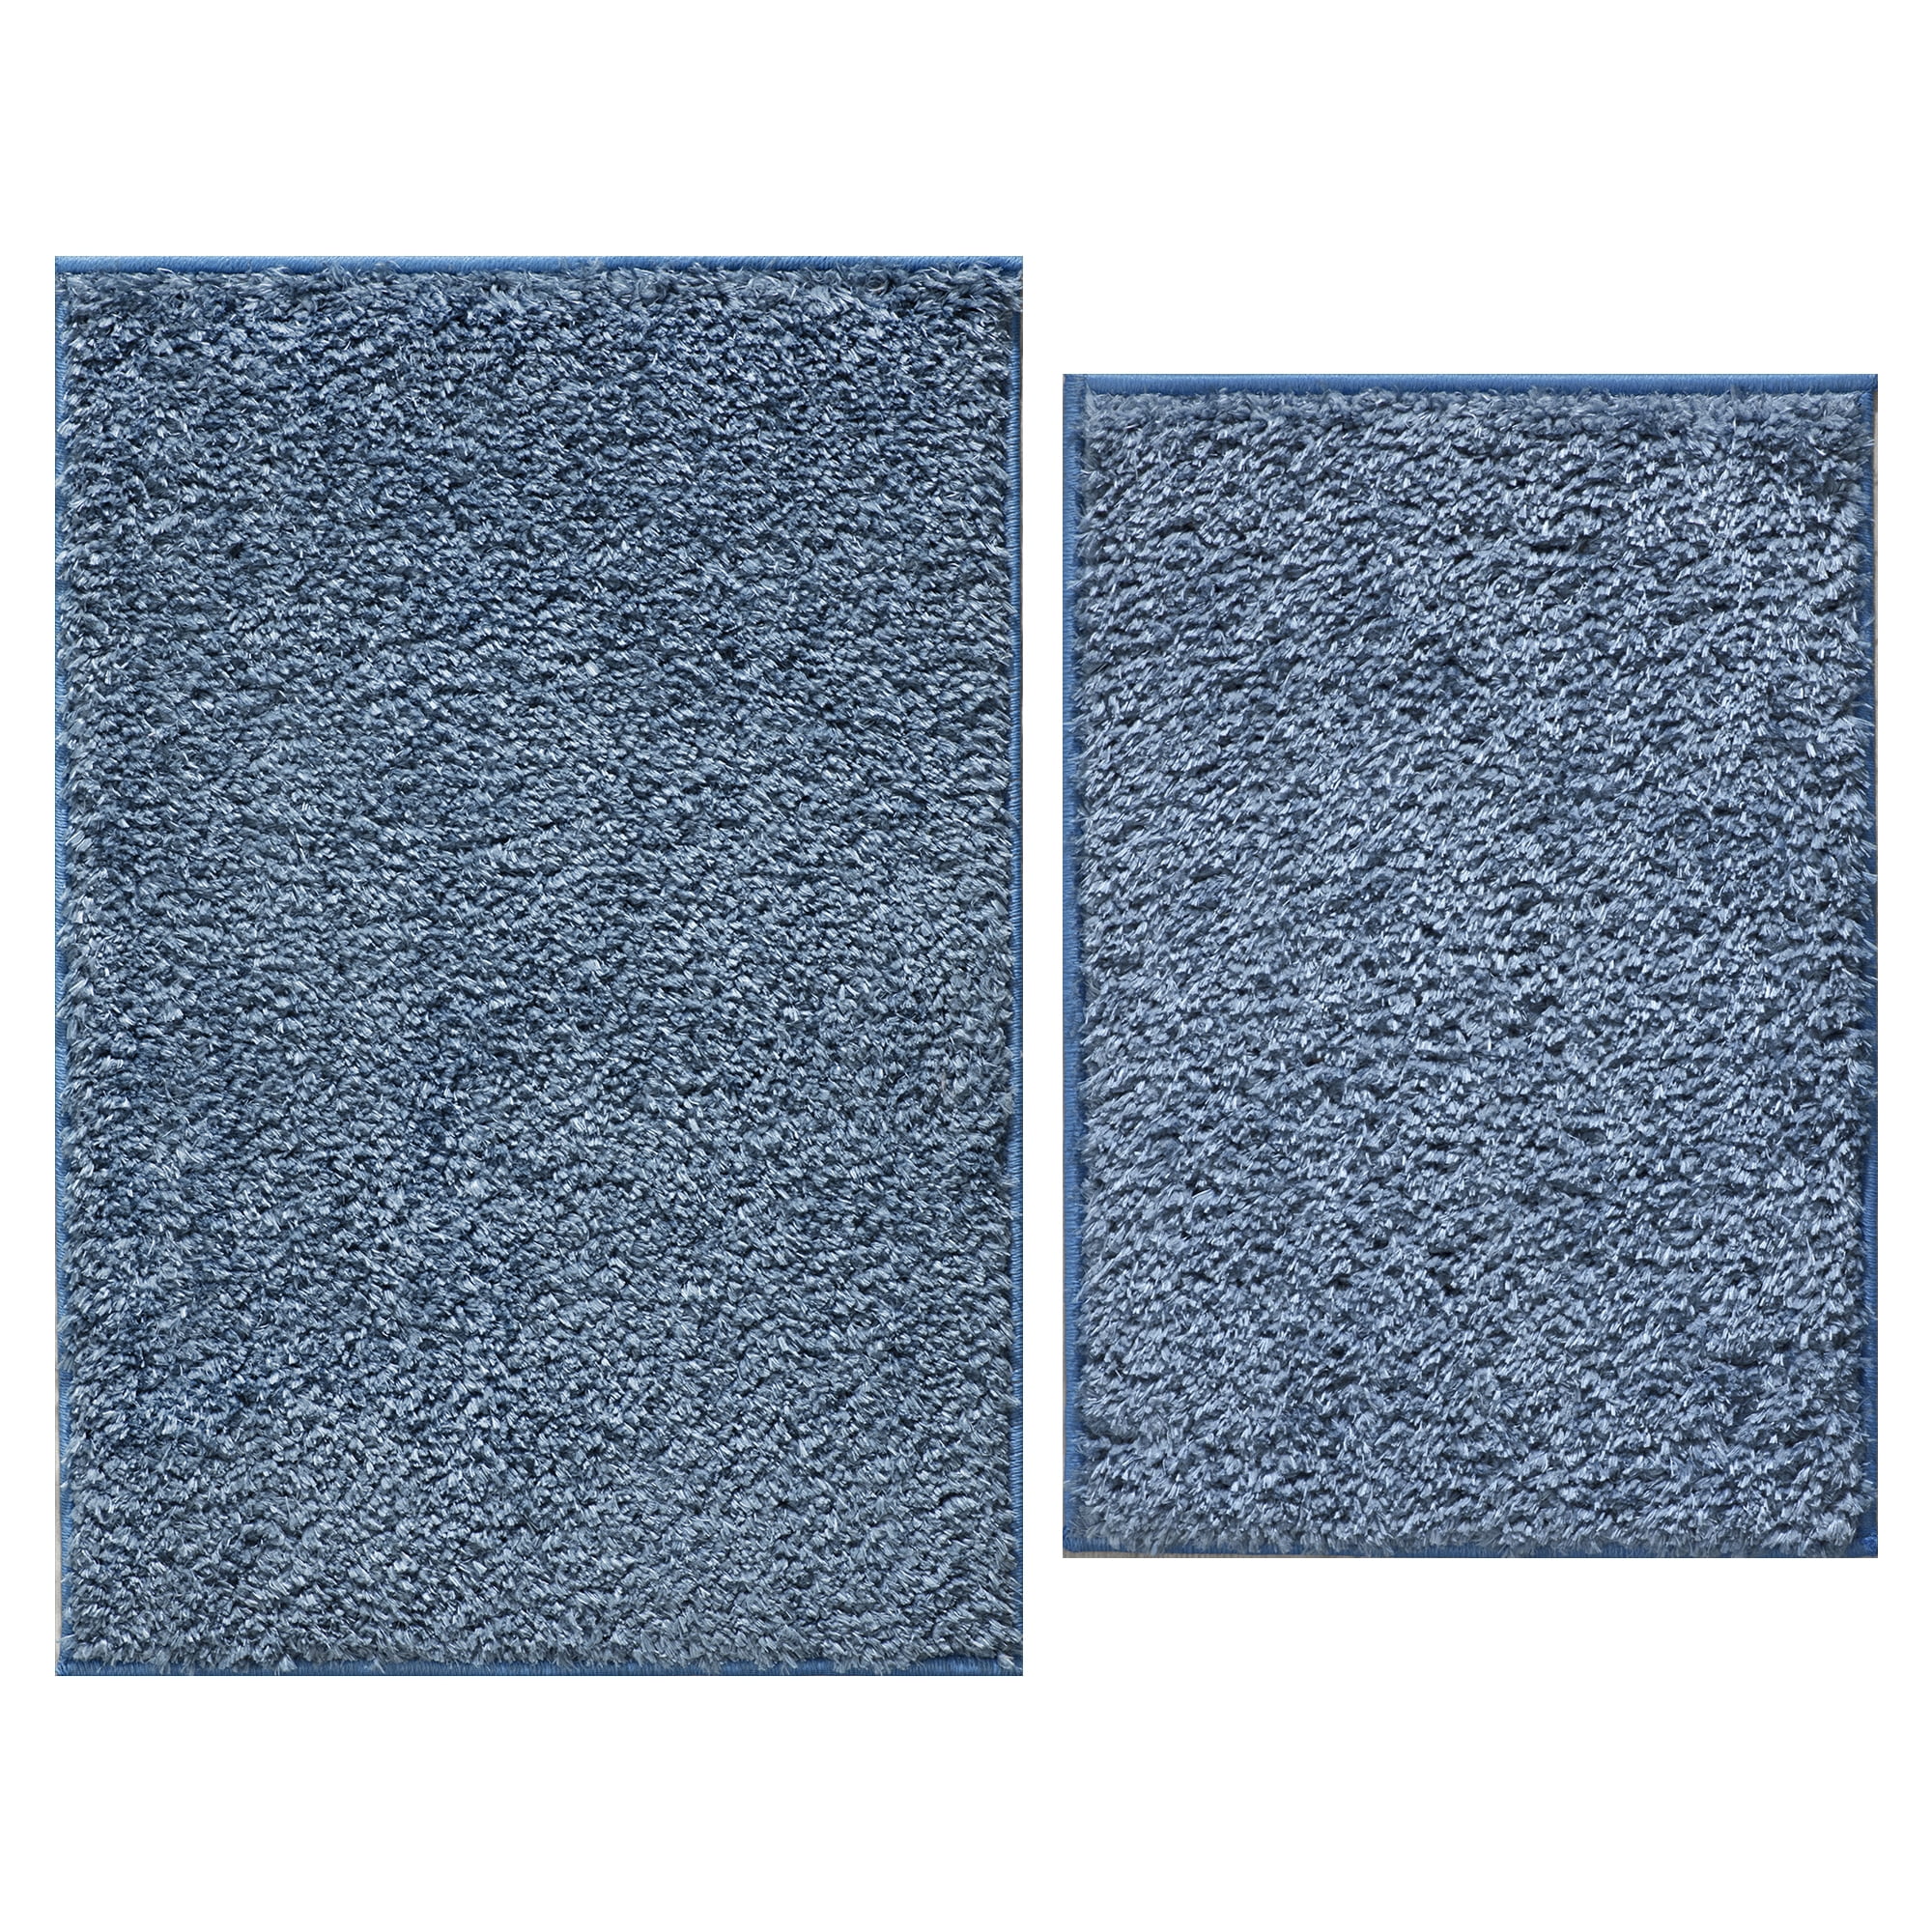 EUCH Non-slip Rubber Backing Carpet Kitchen Mat Doormat Runner Bathroom Rug 2 Piece Sets,15x47+15x23 coffee bean 